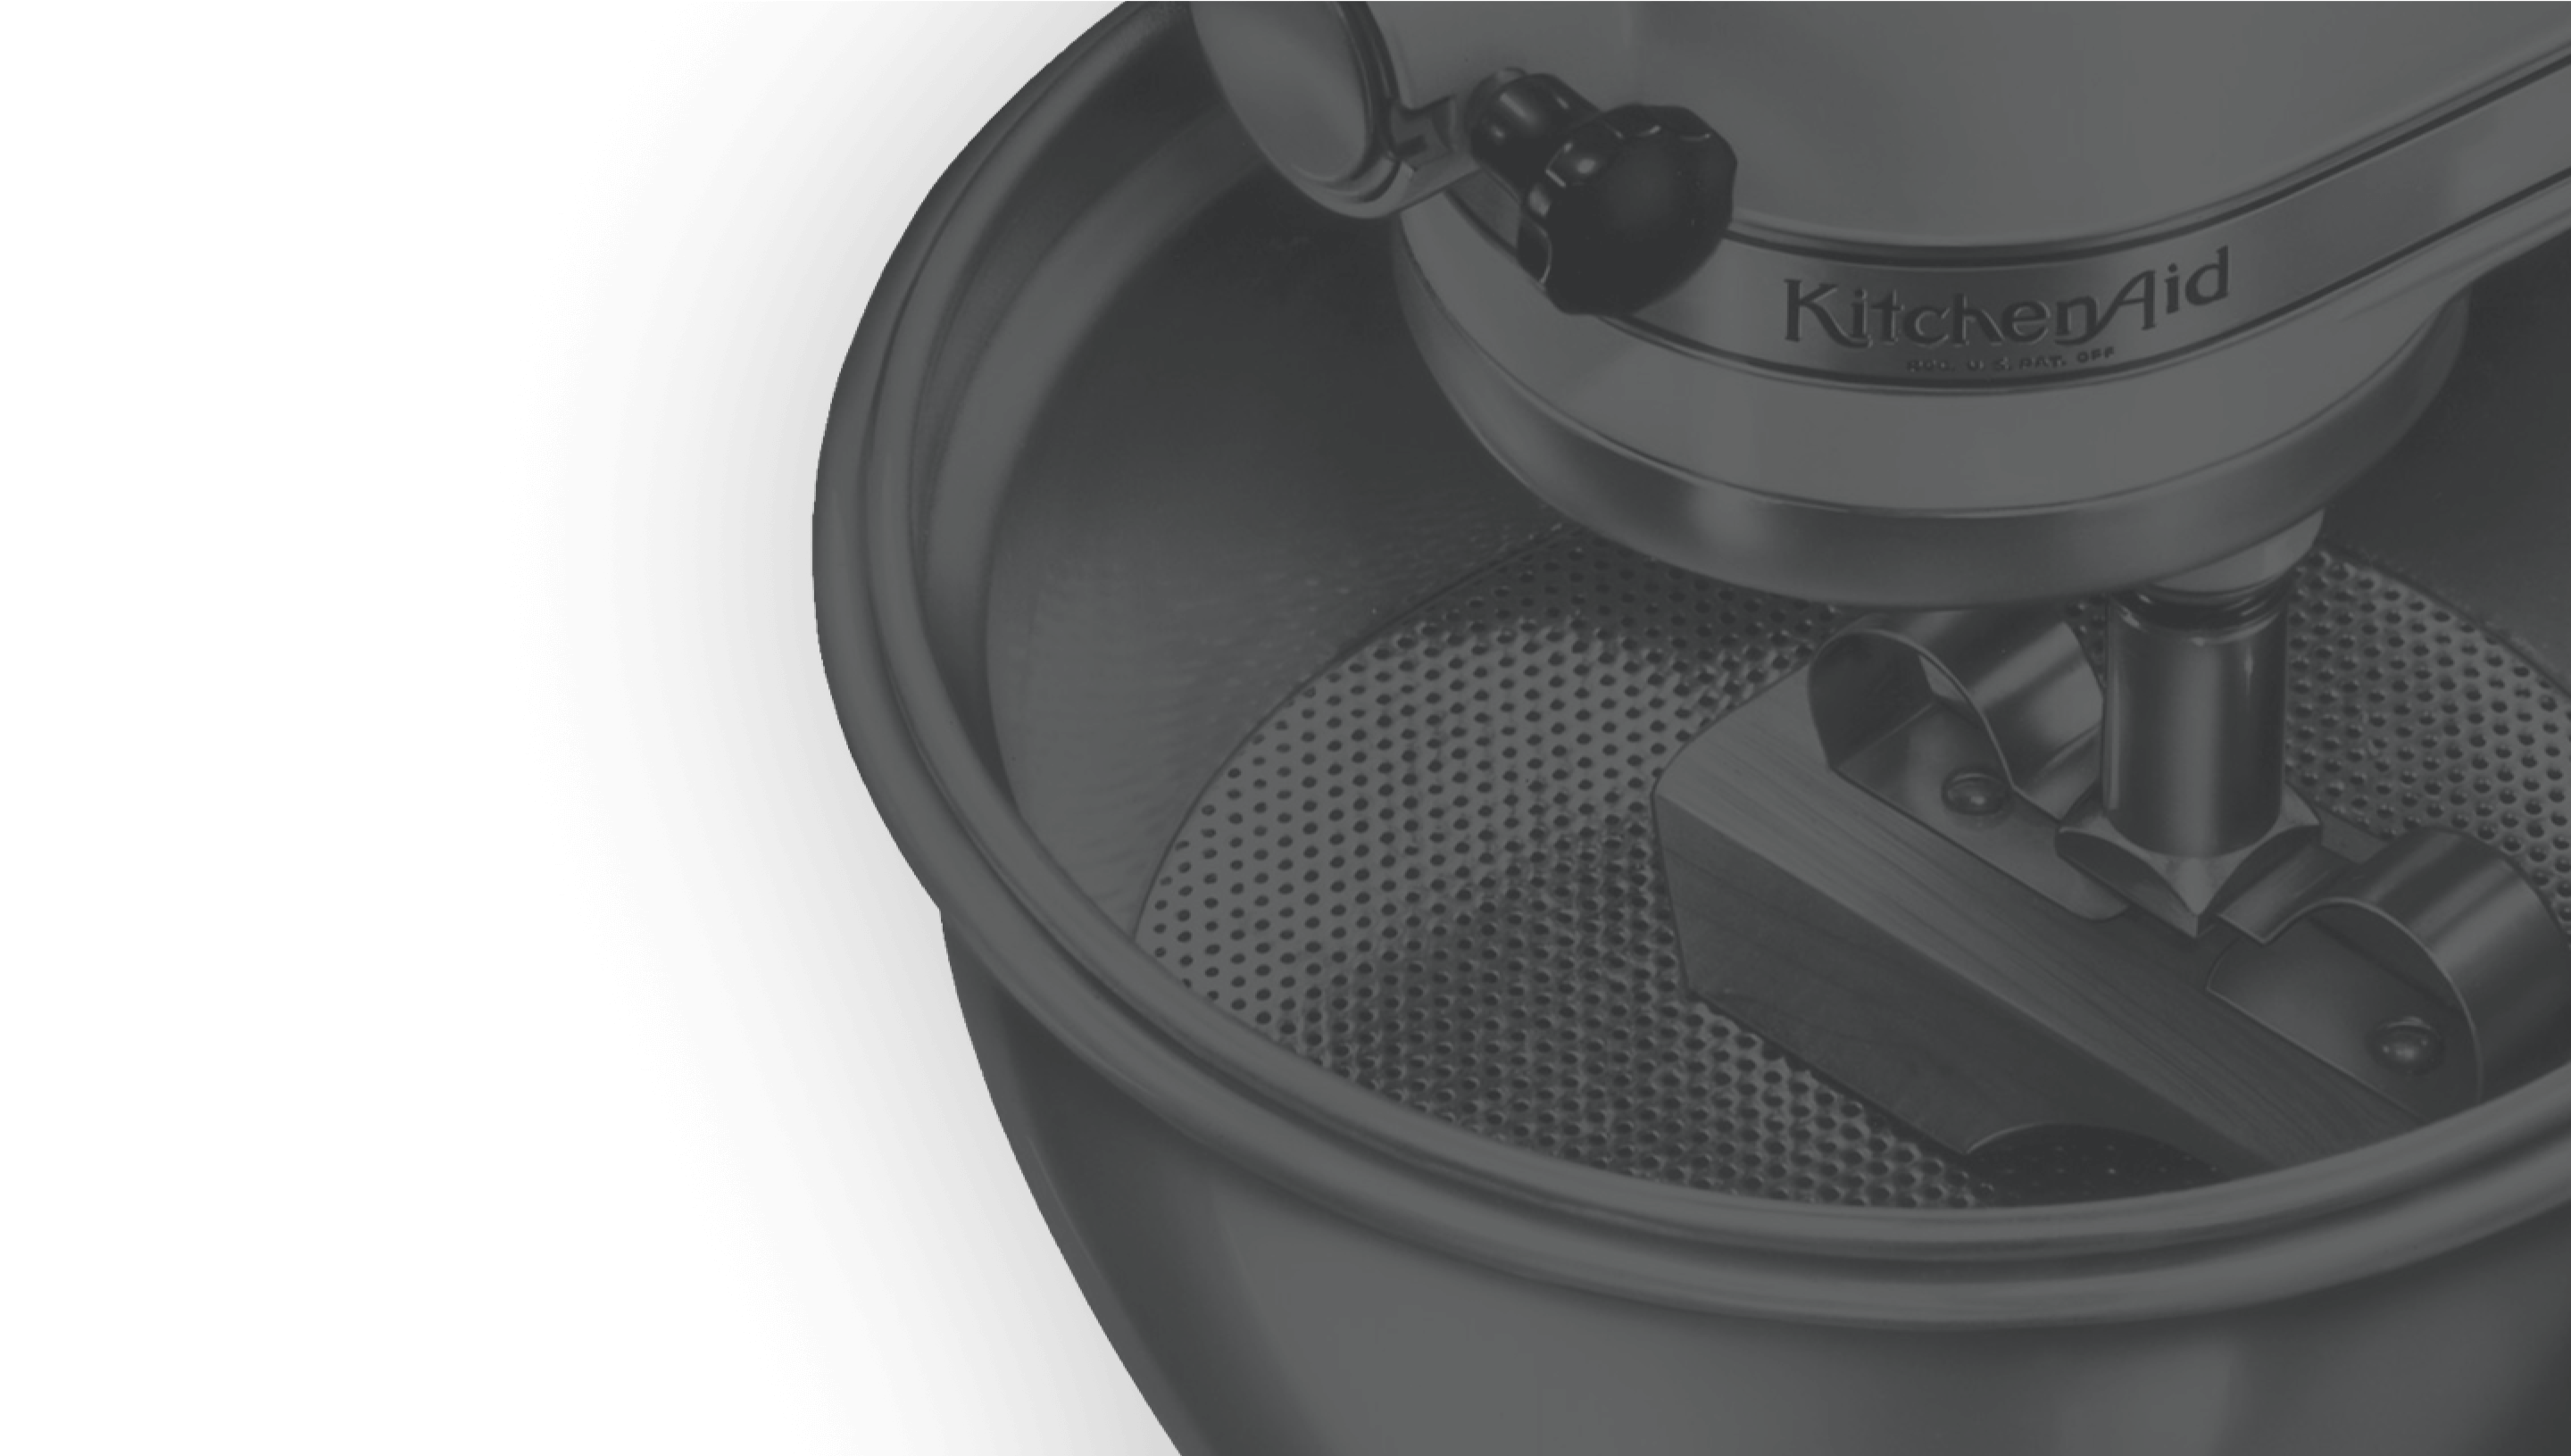 KitchenAid Pro Line KES2102 specifications